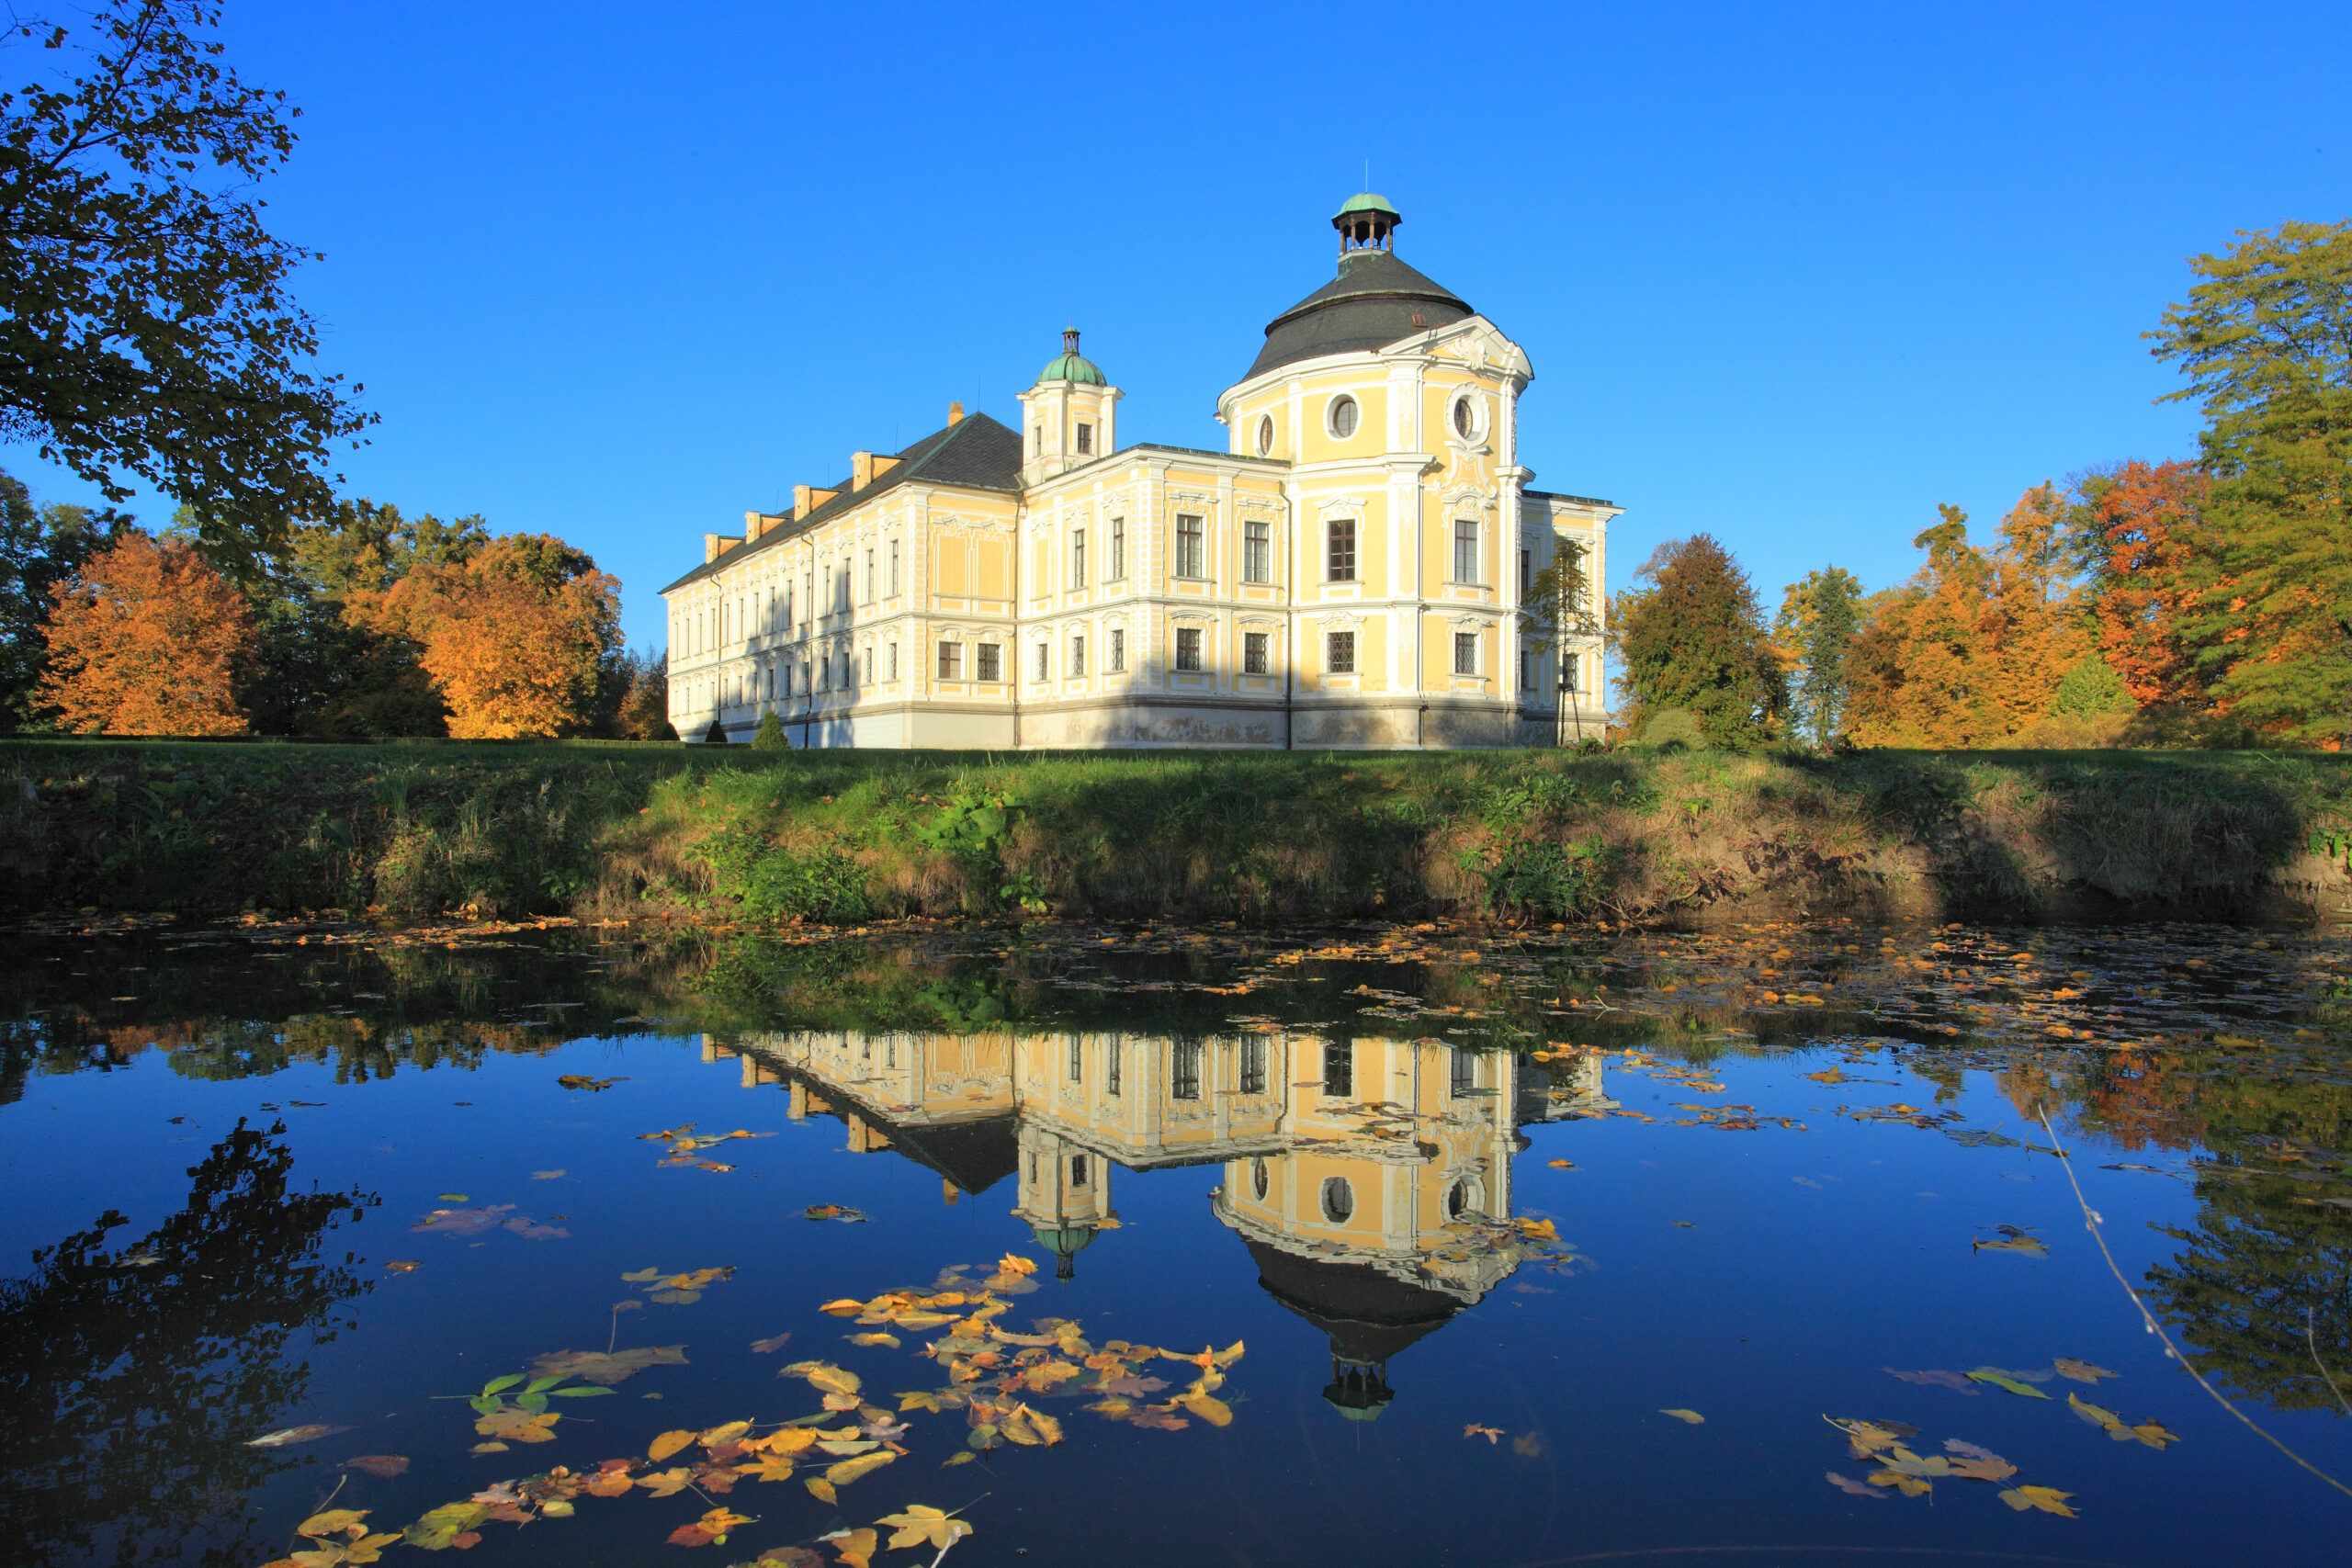 The Kravaře Chateau